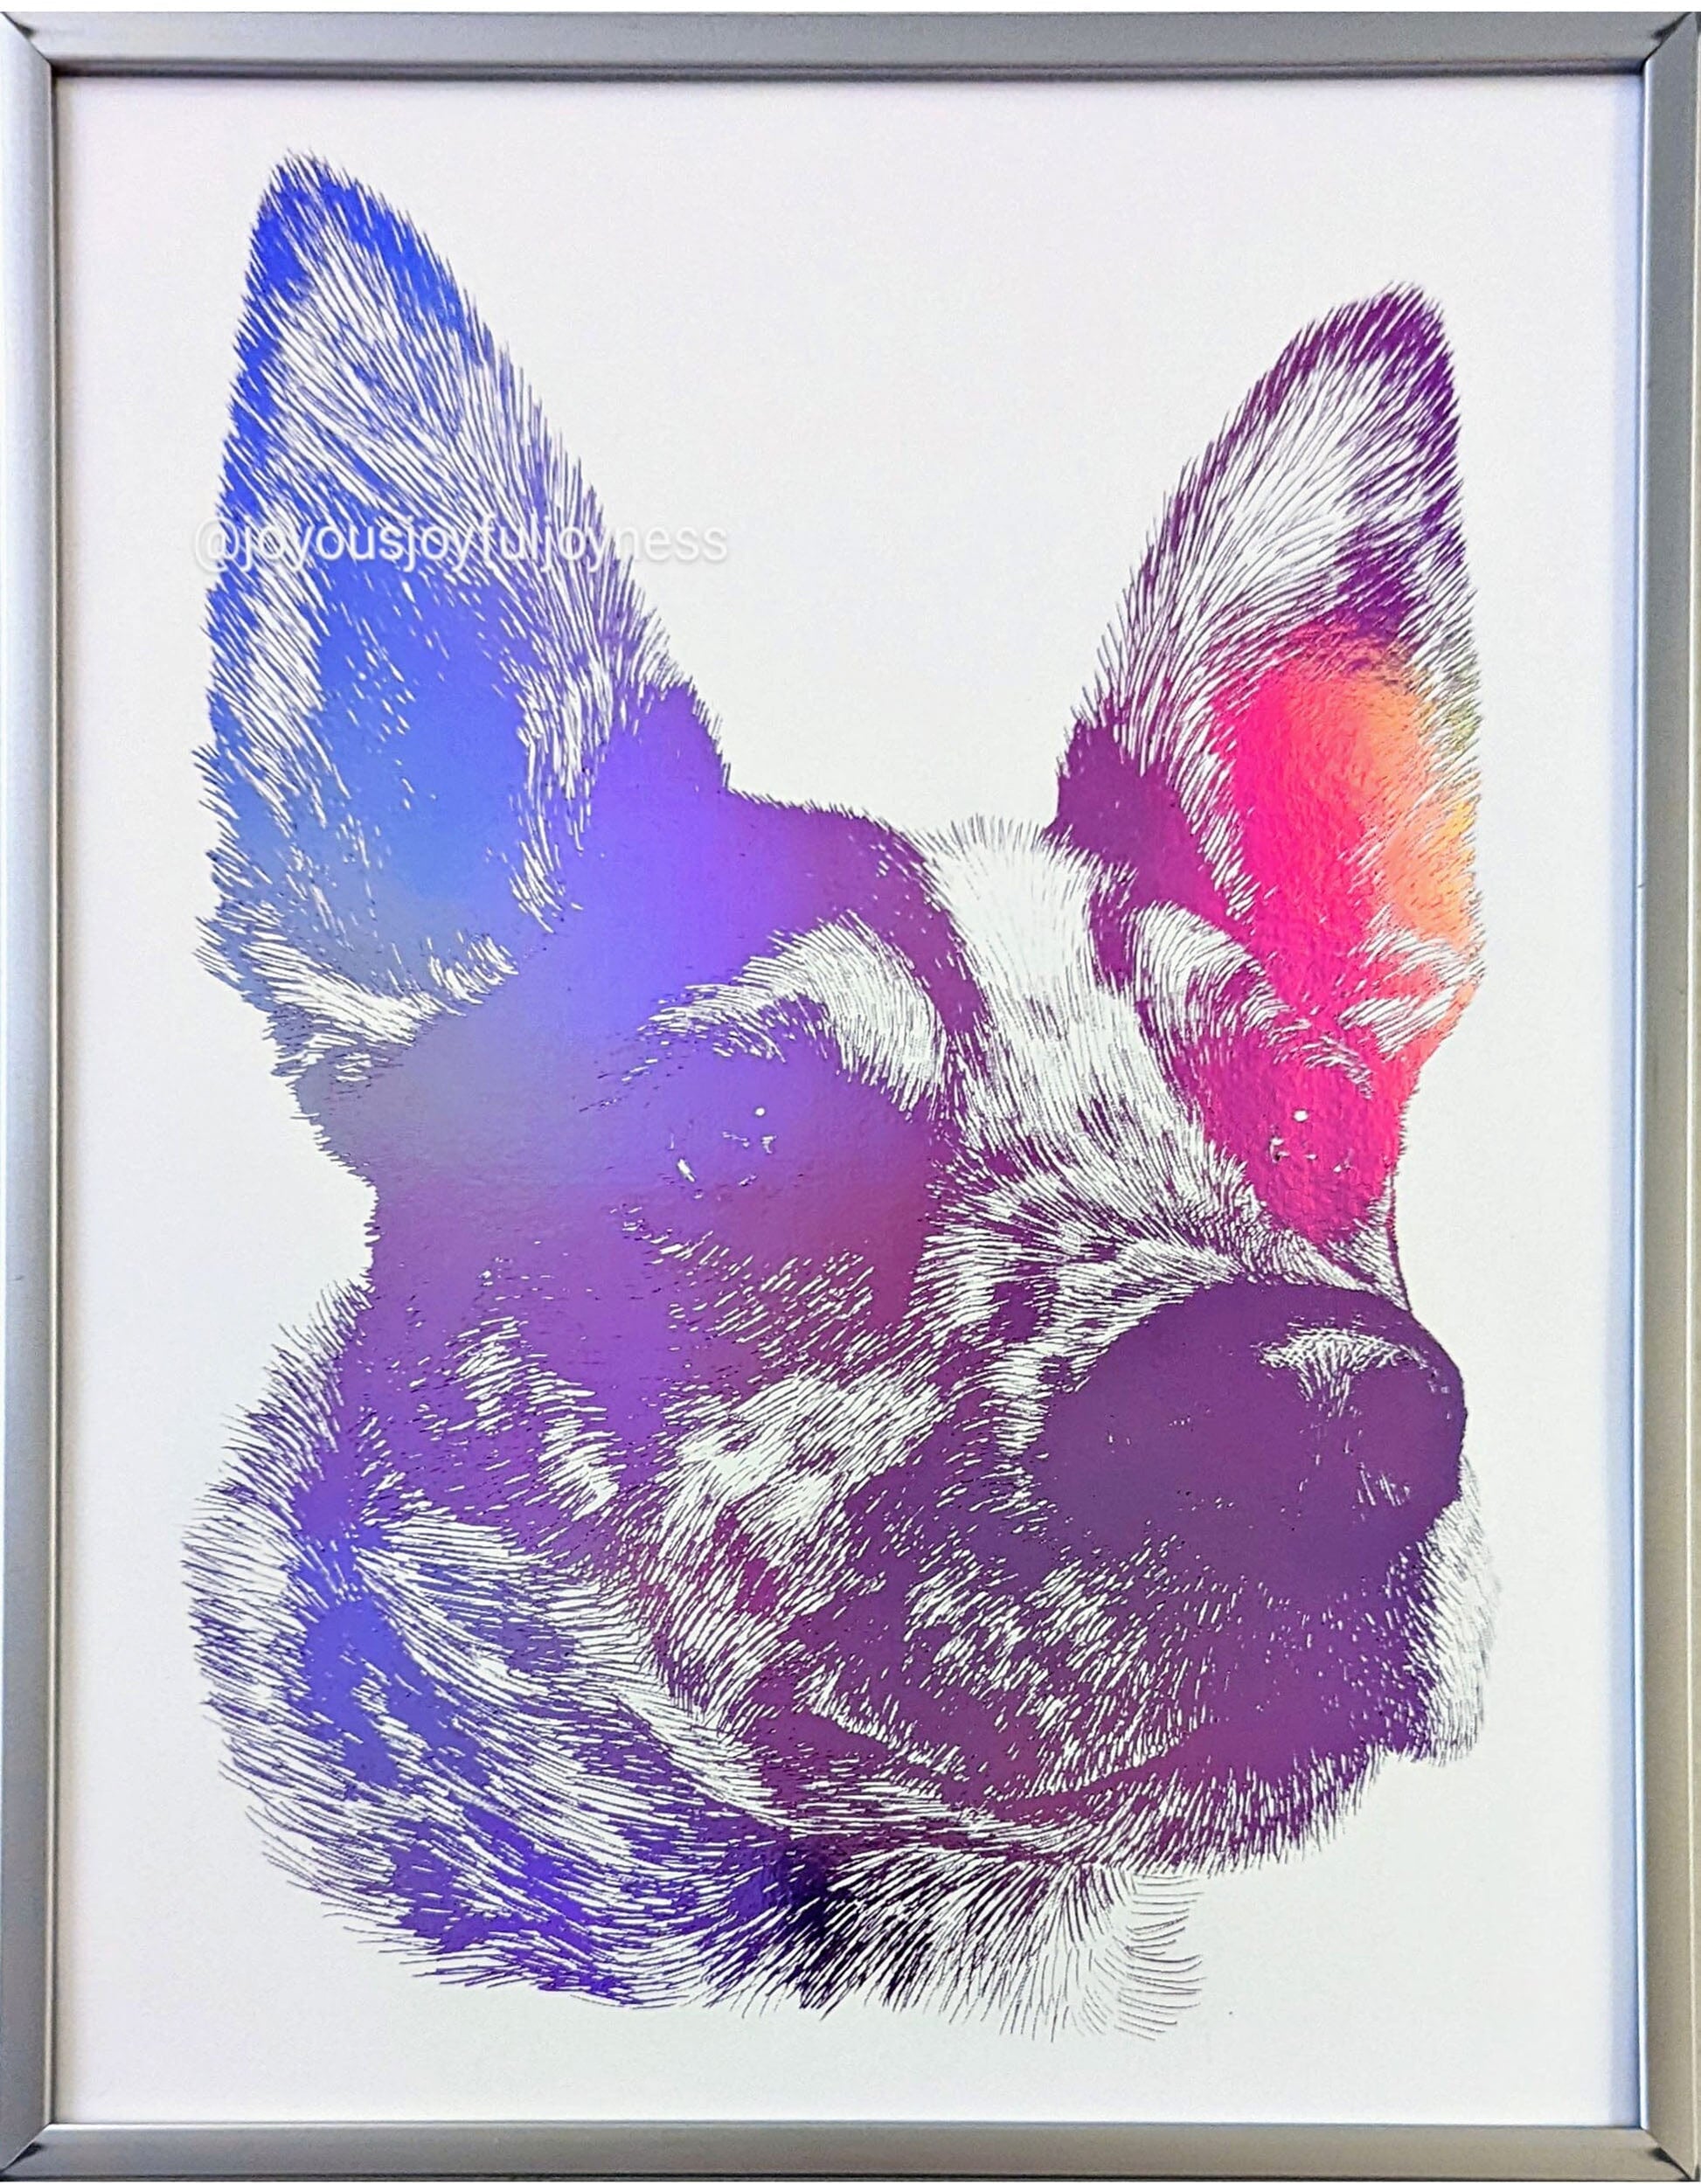 Custom Dog Drawings Posters, Prints, & Visual Artwork JoyousJoyfulJoyness 